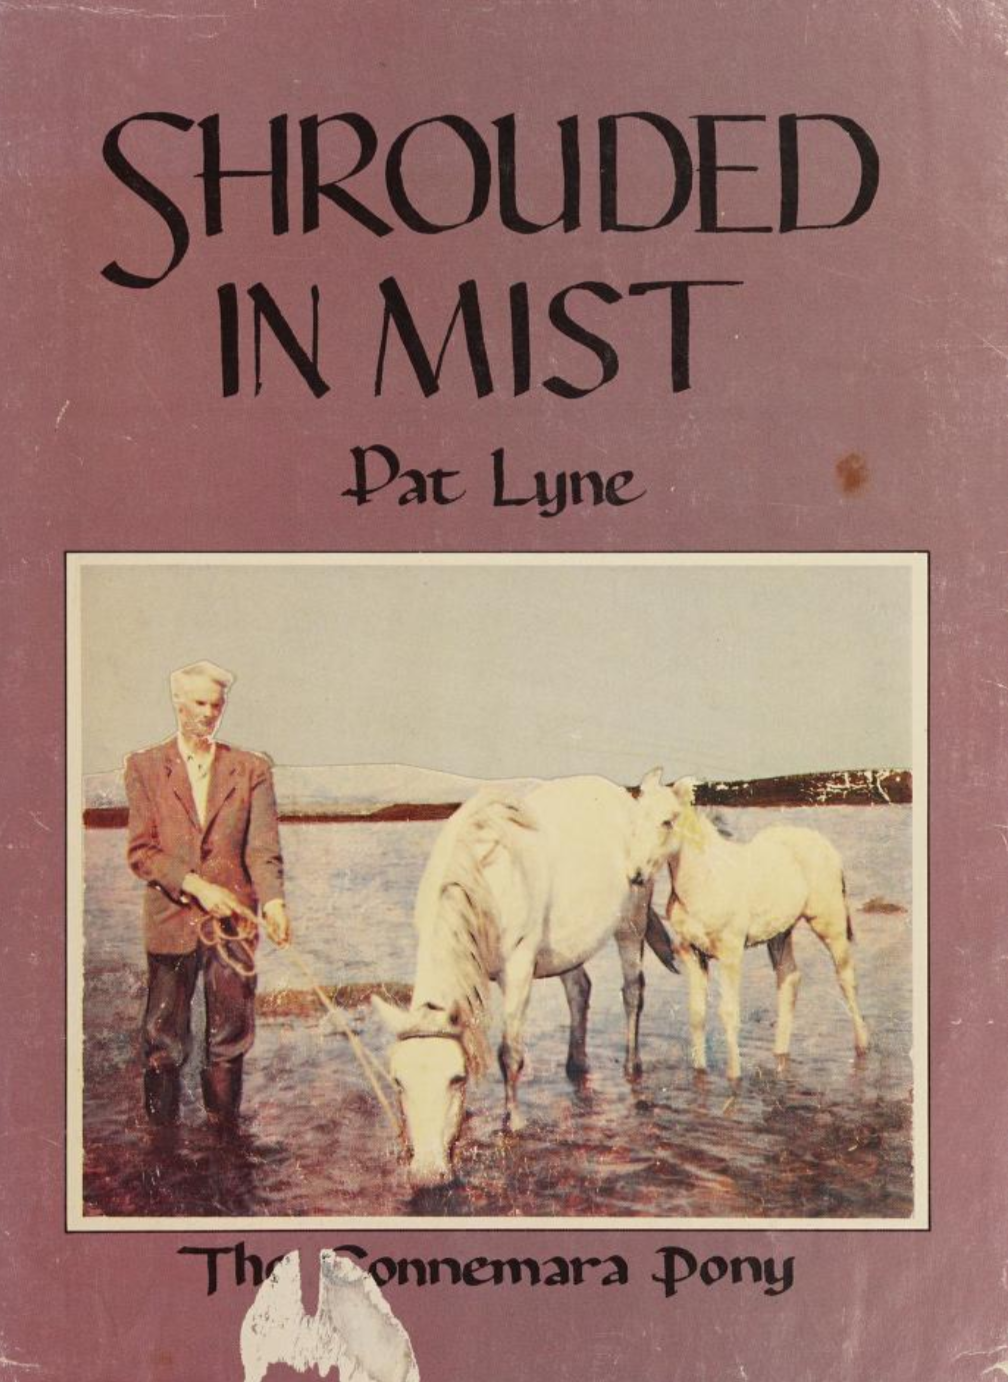 ACPS digital library book Shrouded in Mist by Pat Lyne